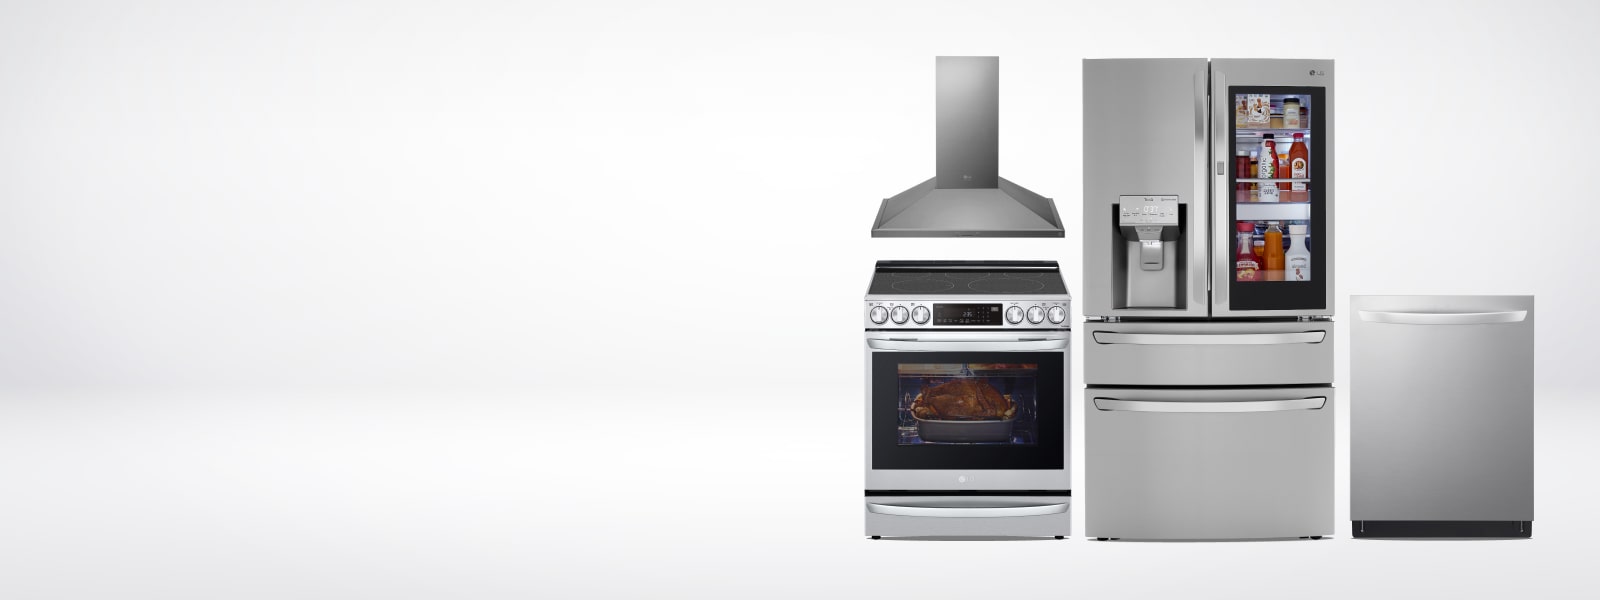 LG Kitchen appliances on gray background